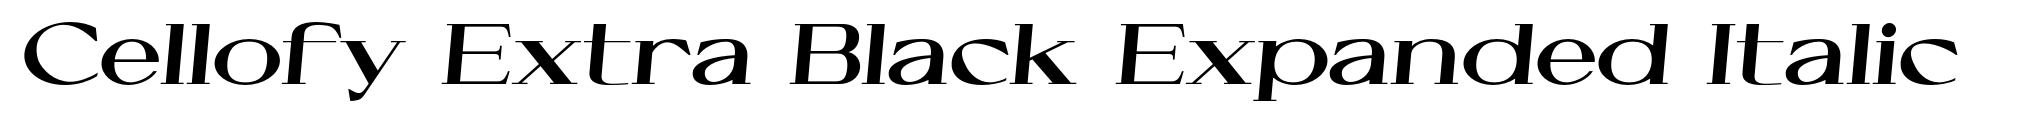 Cellofy Extra Black Expanded Italic image